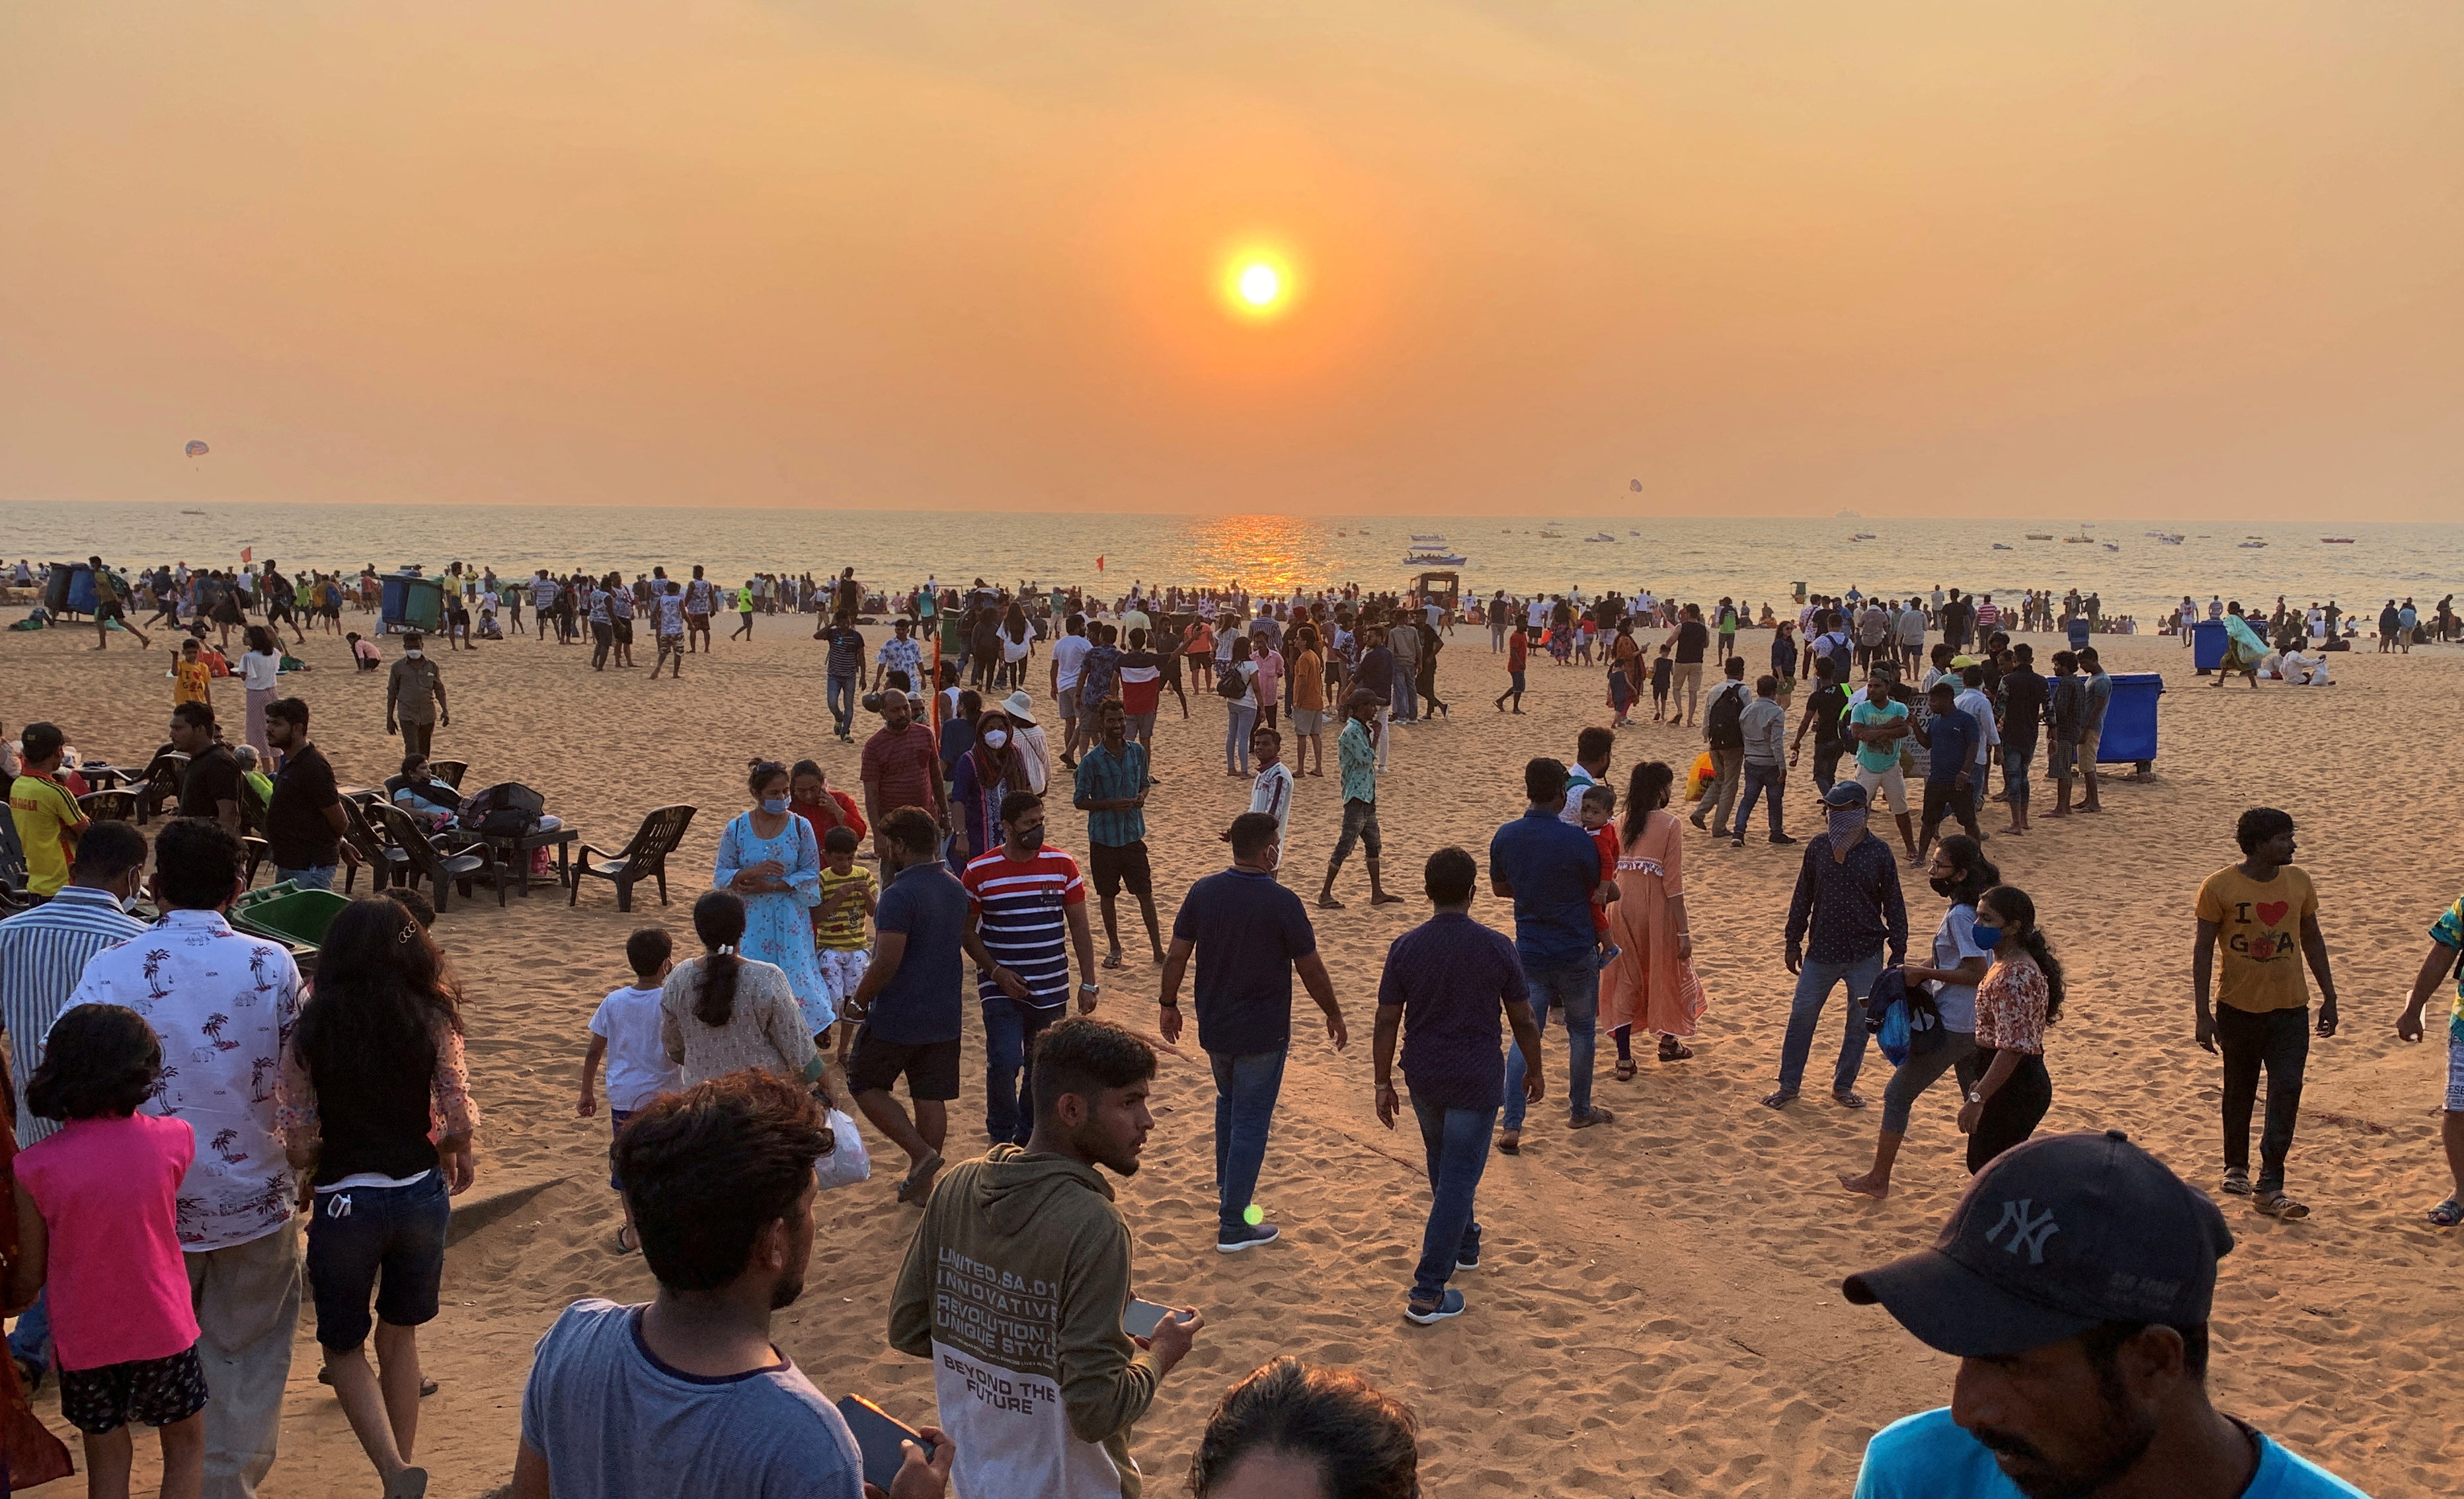 People visit Calangute Beach during the ongoing coronavirus disease (COVID-19) pandemic, in Goa